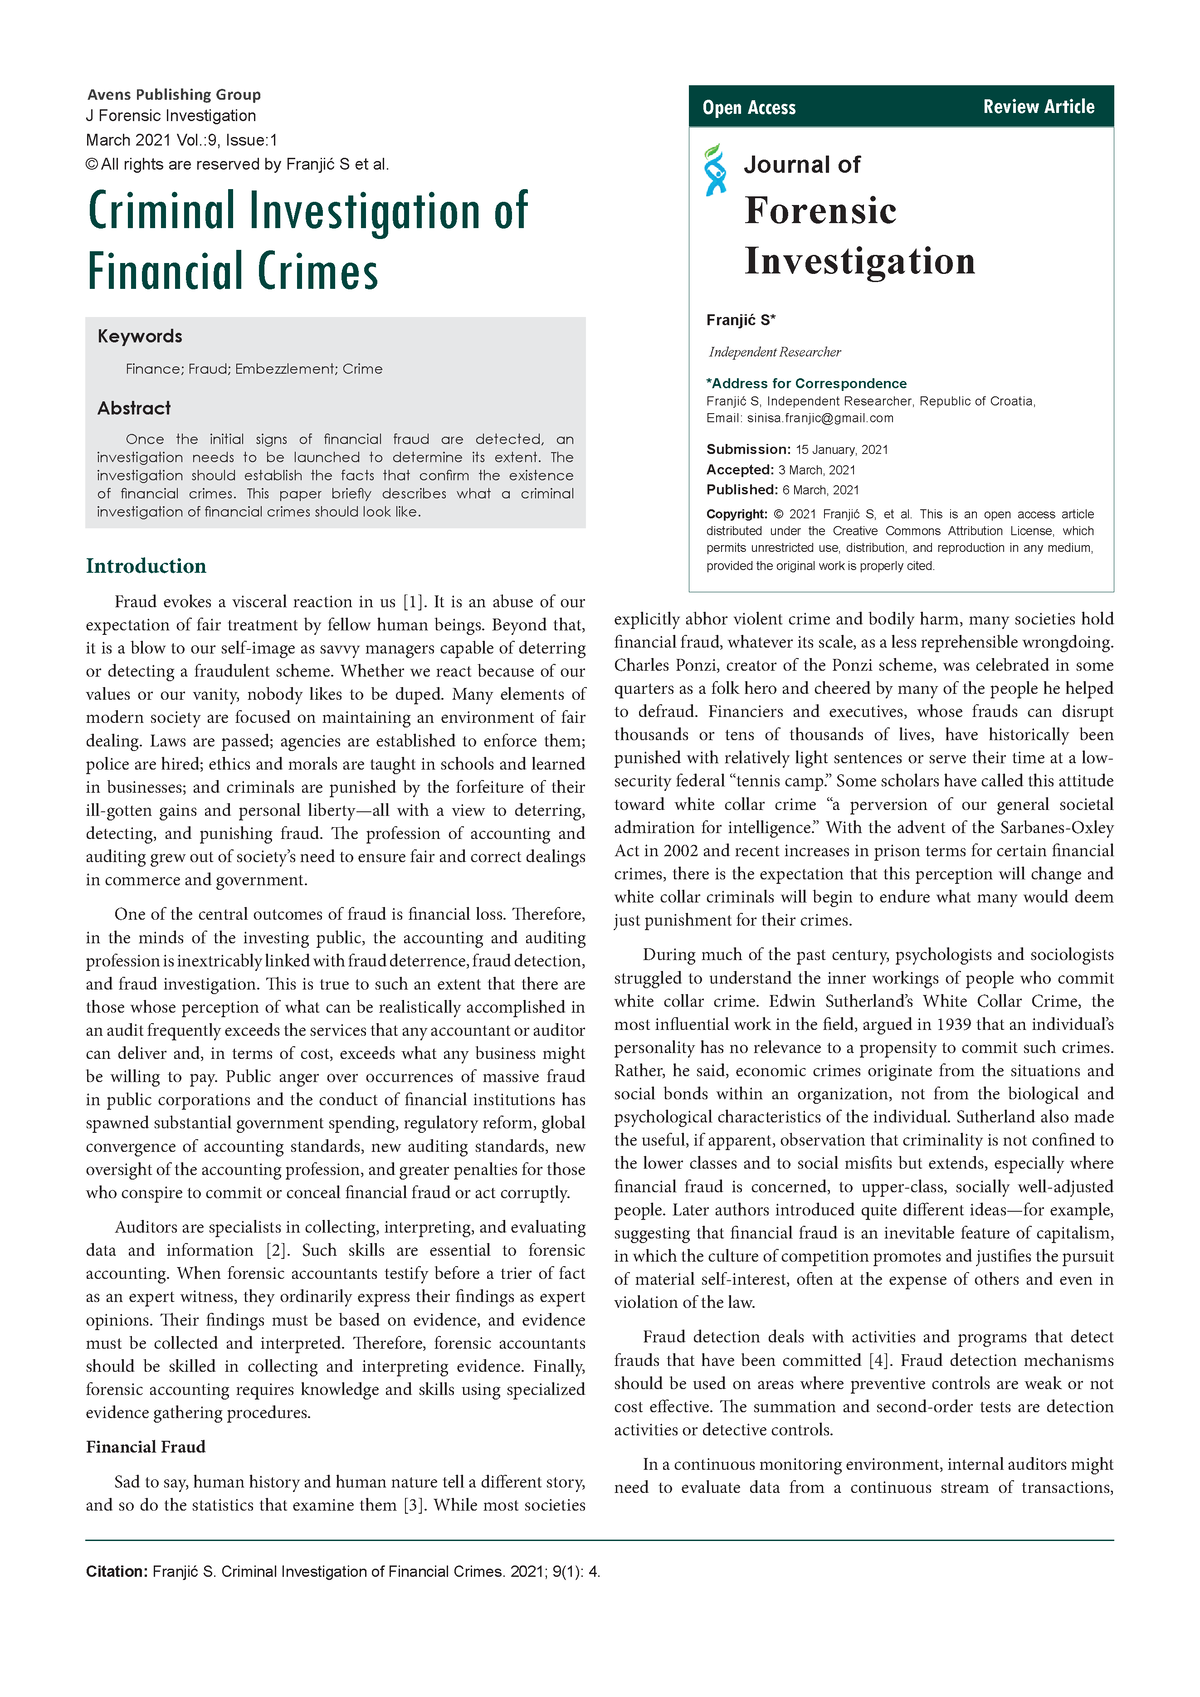 dissertation on financial crime